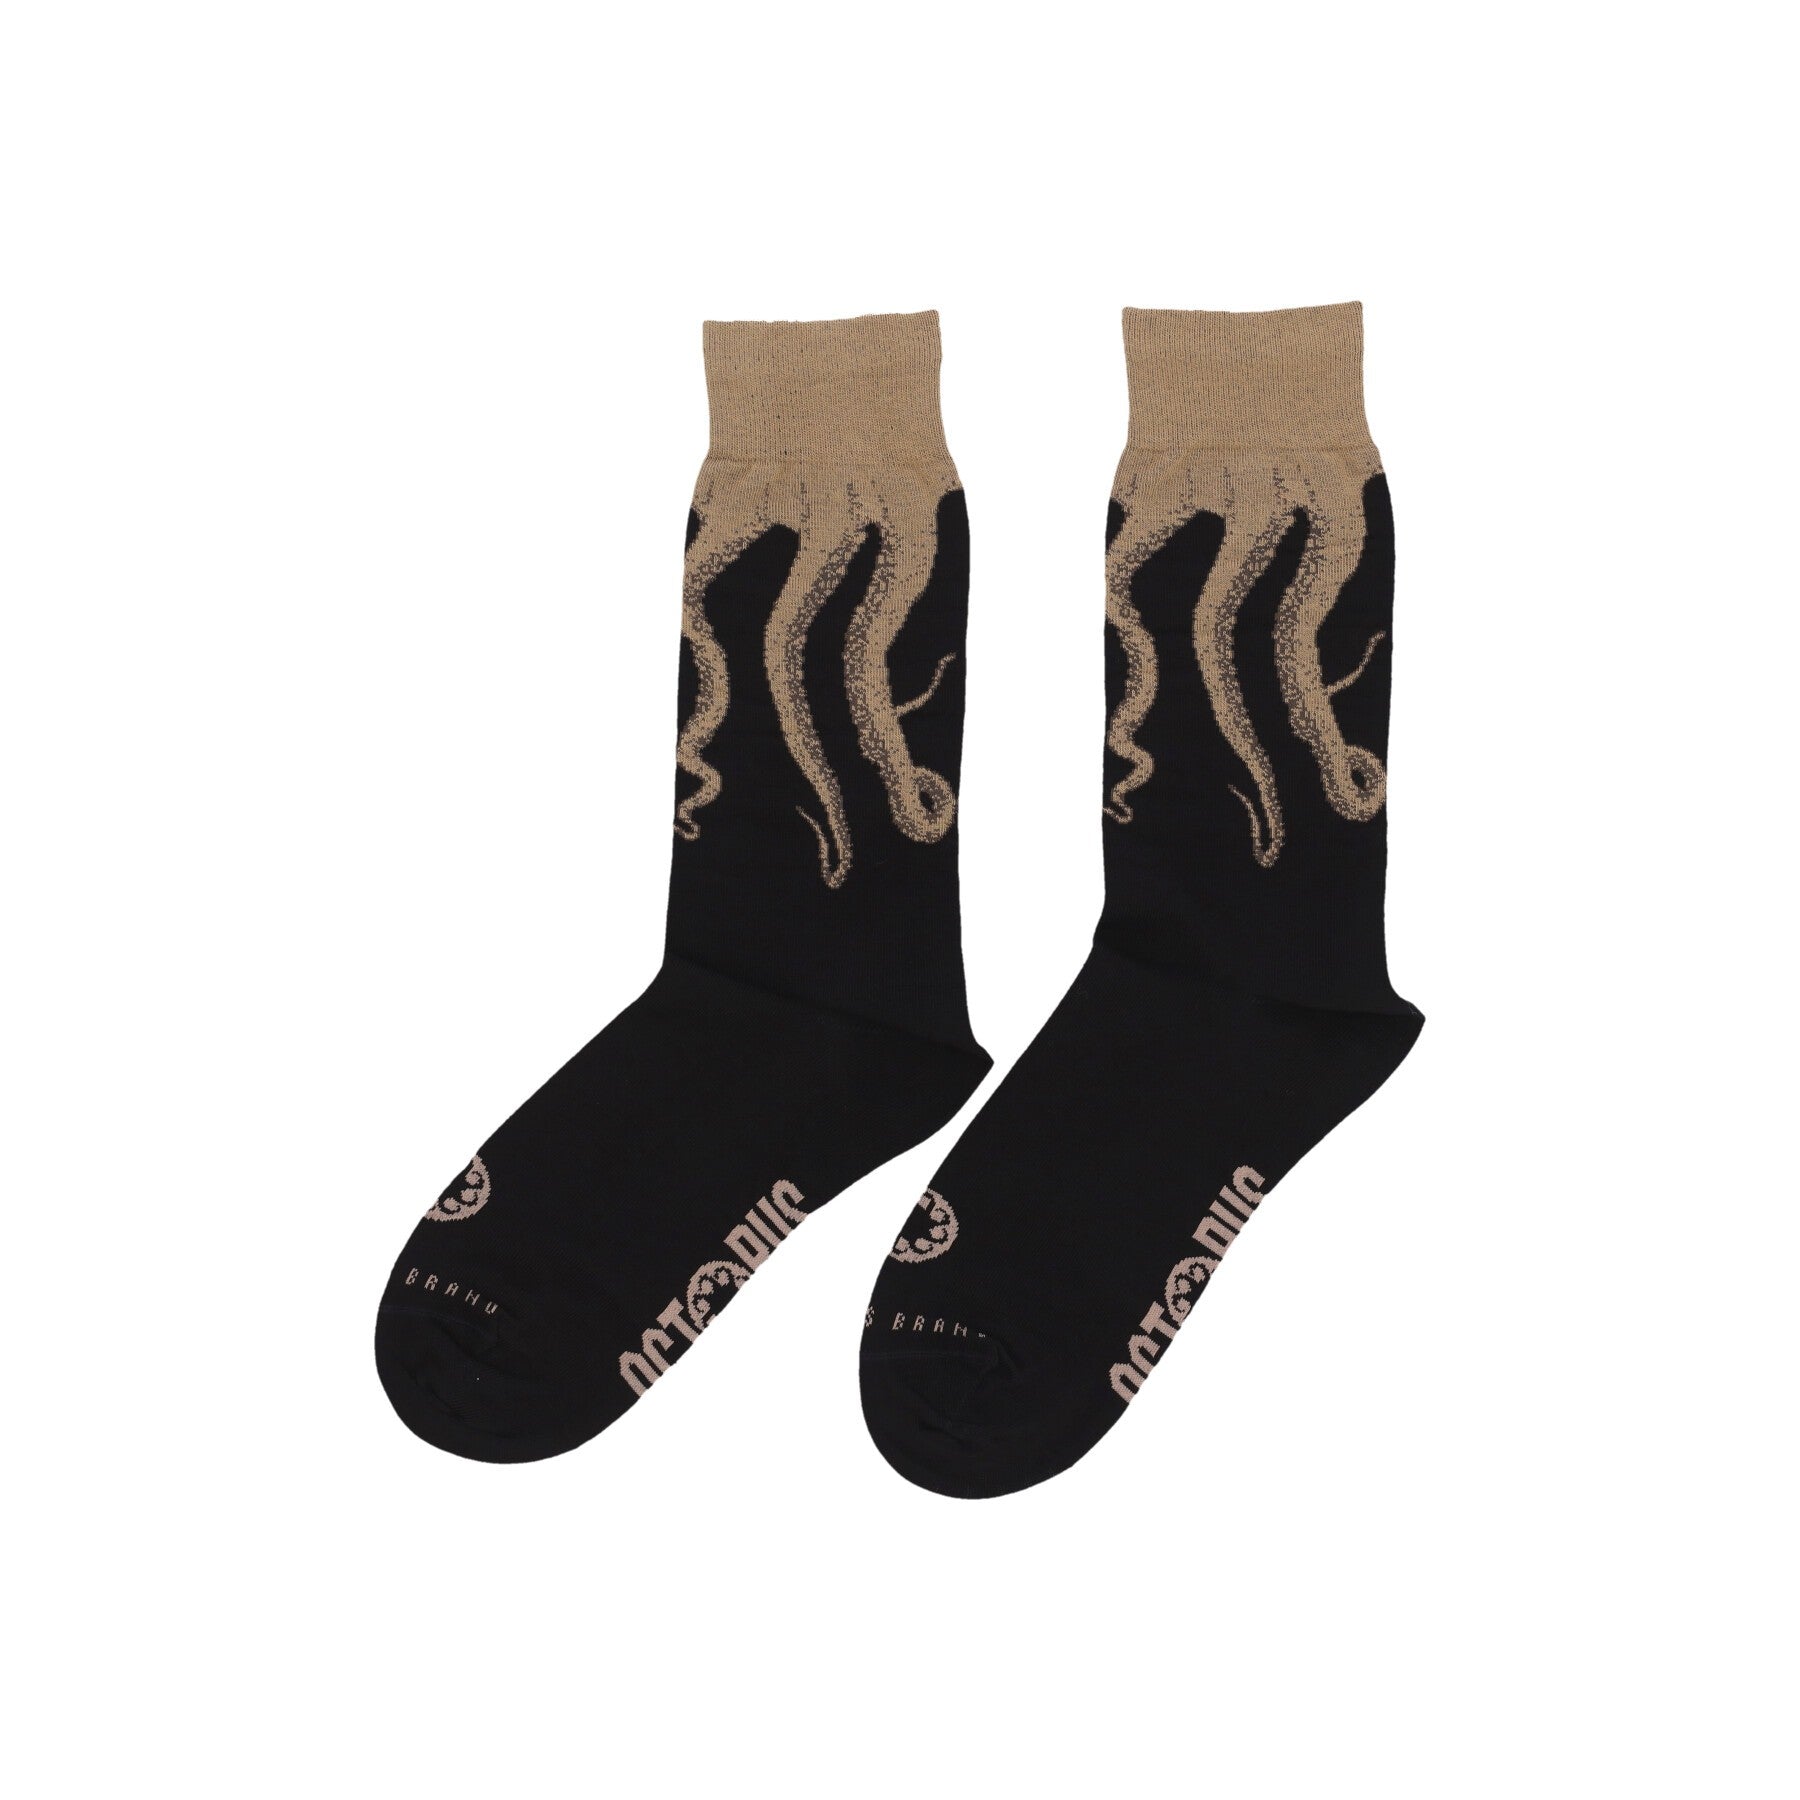 Octopus, Calza Media Uomo Original Socks, Black/cookie